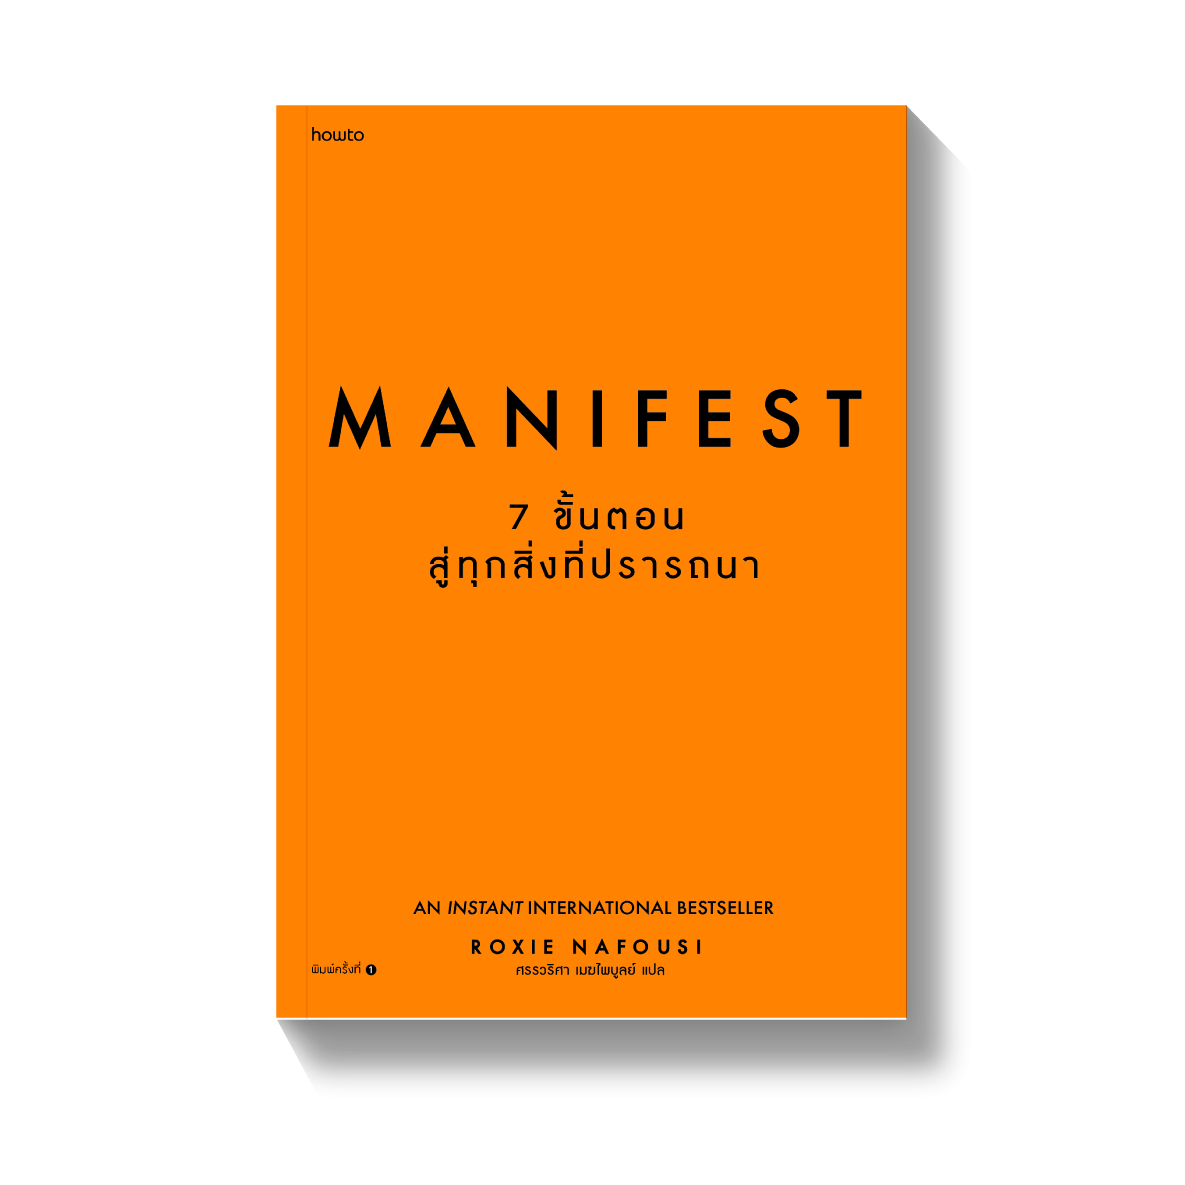 Manifest: 7 ขั้นตอนสู่ทุกสิ่งที่ปรารถนา l AMARINBOOKS l howto